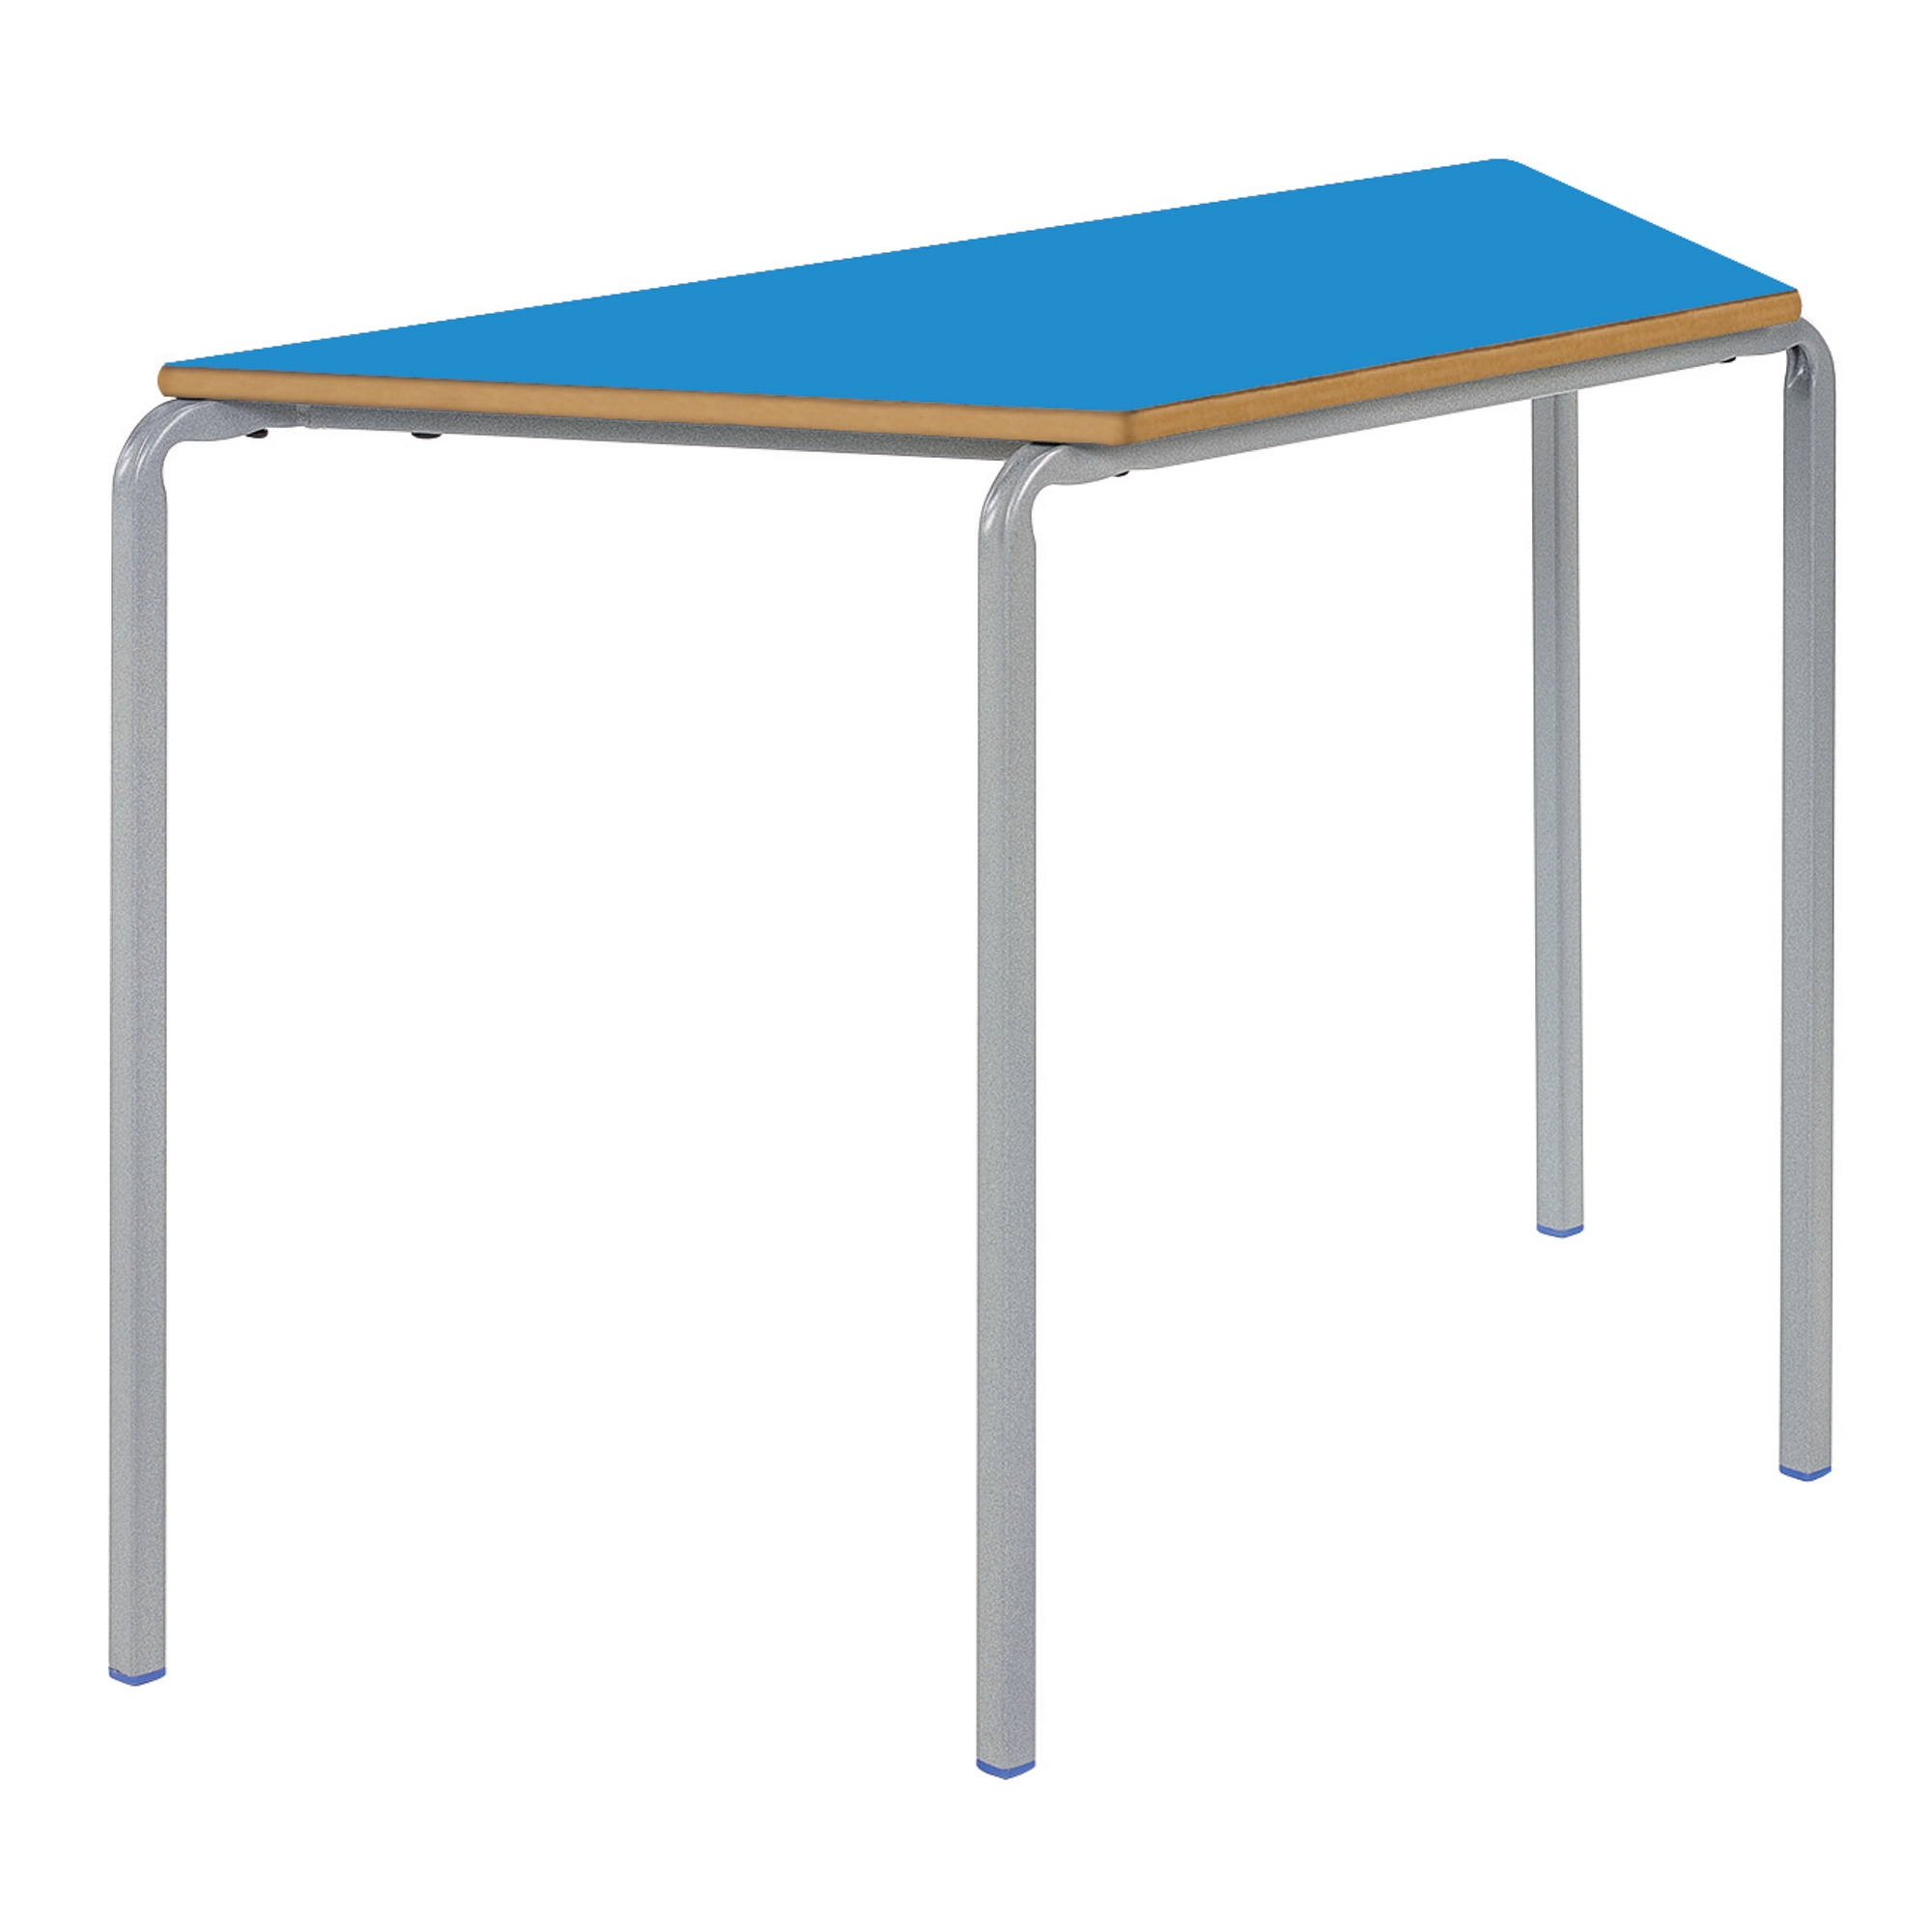 Classmates Trapezoidal Crushed Bent Classroom Table - 1100 x 550 x 710mm - Blue